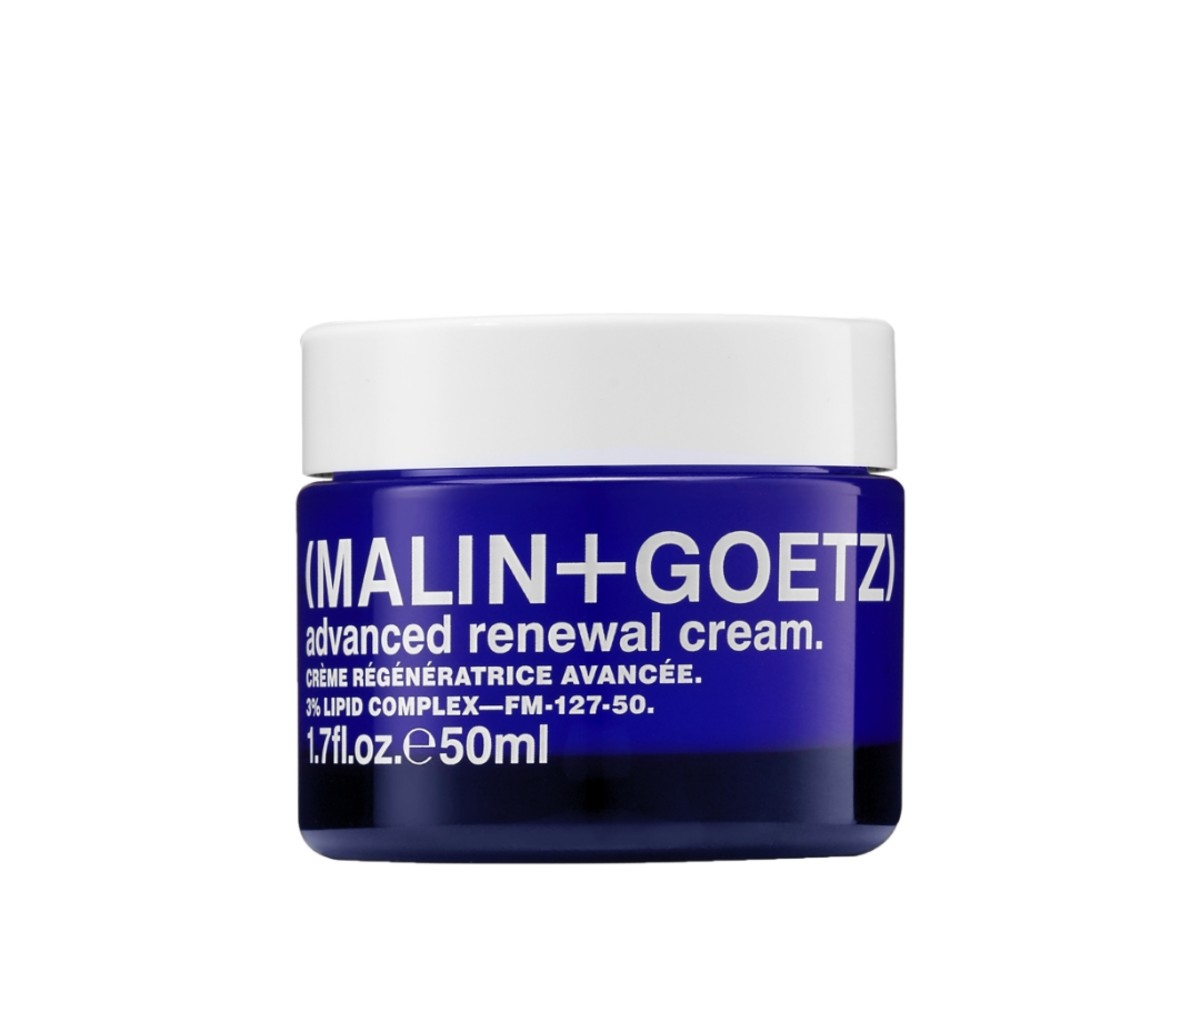 moisturizers for winter dry skin Malin + Goetz Advanced Renewal Cream